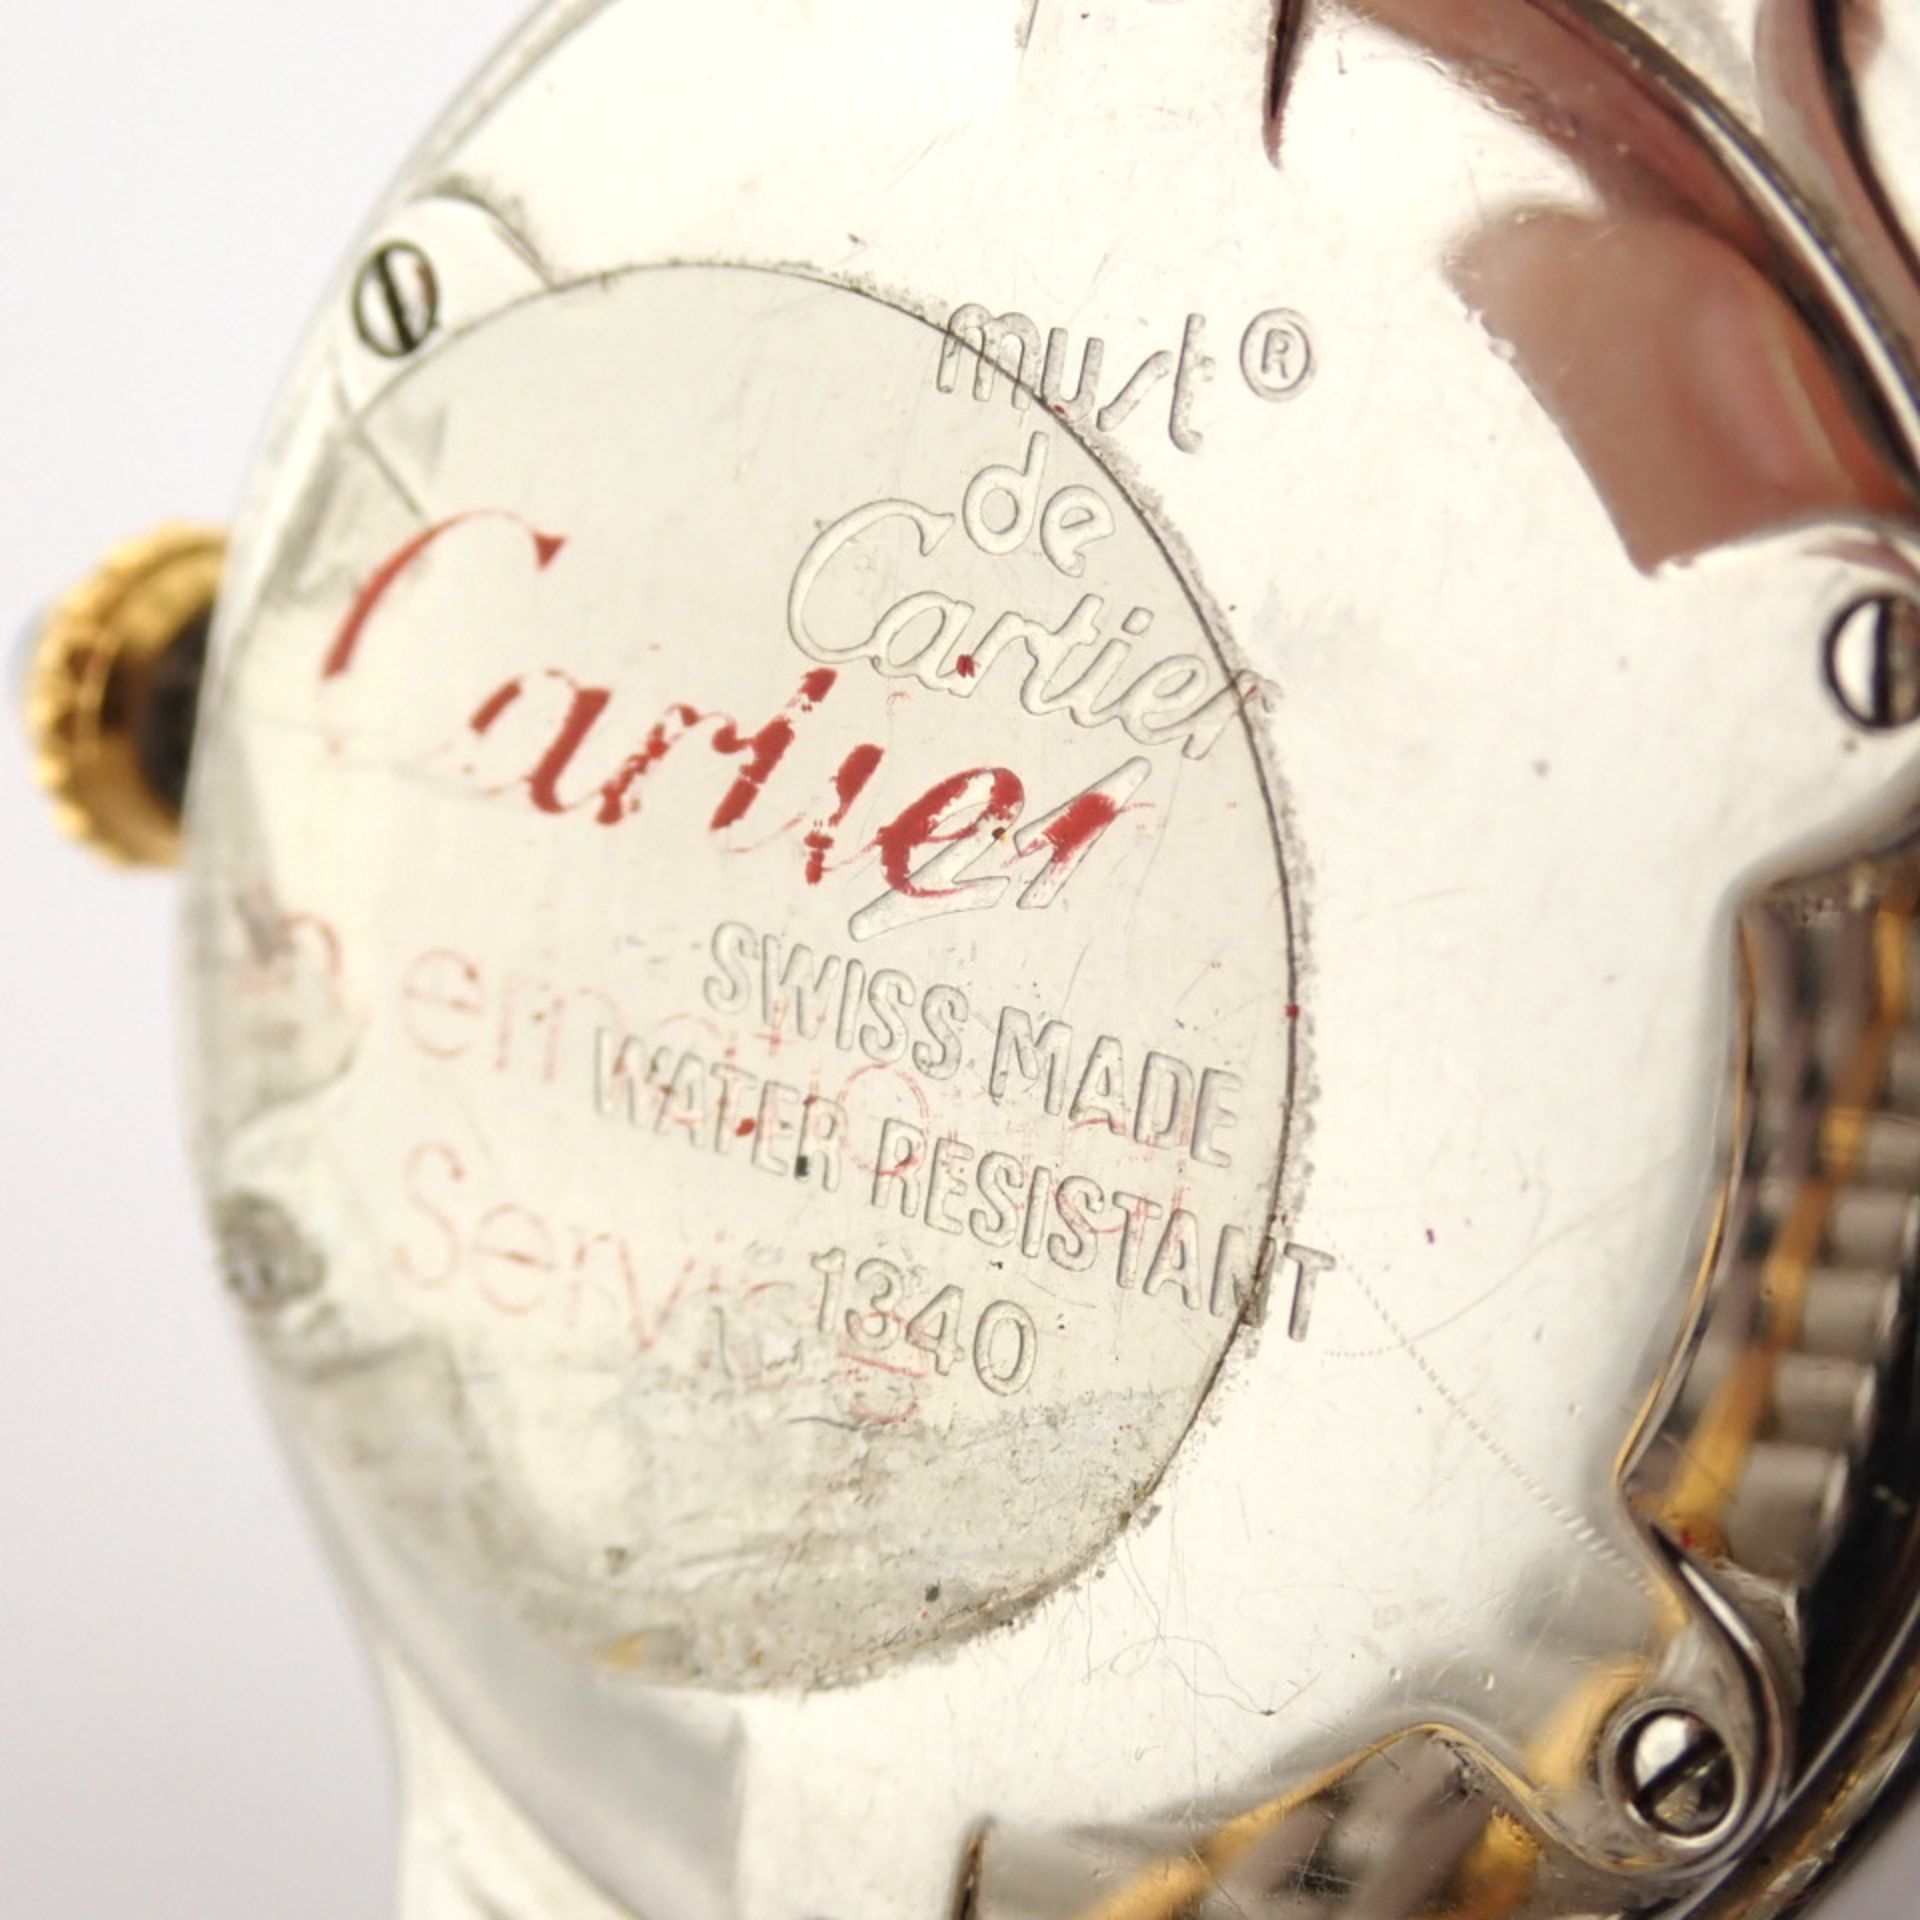 Cartier / Must de Cartier - Lady's Gold/Steel Wrist Watch - Image 2 of 10